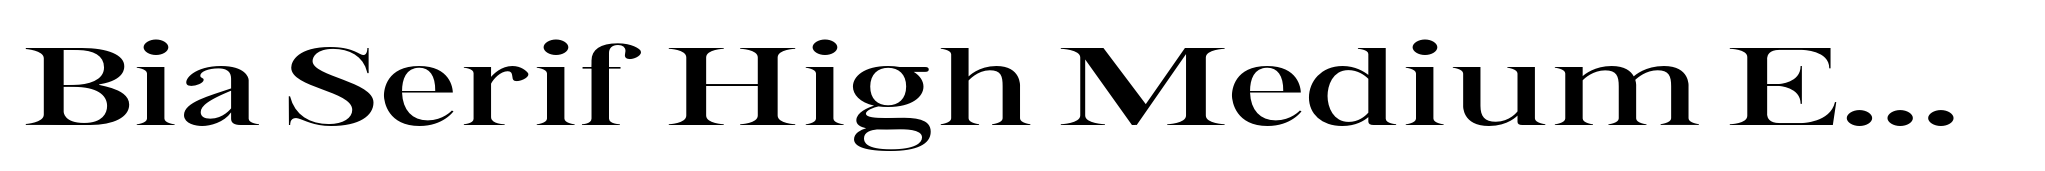 Bia Serif High Medium Expanded image